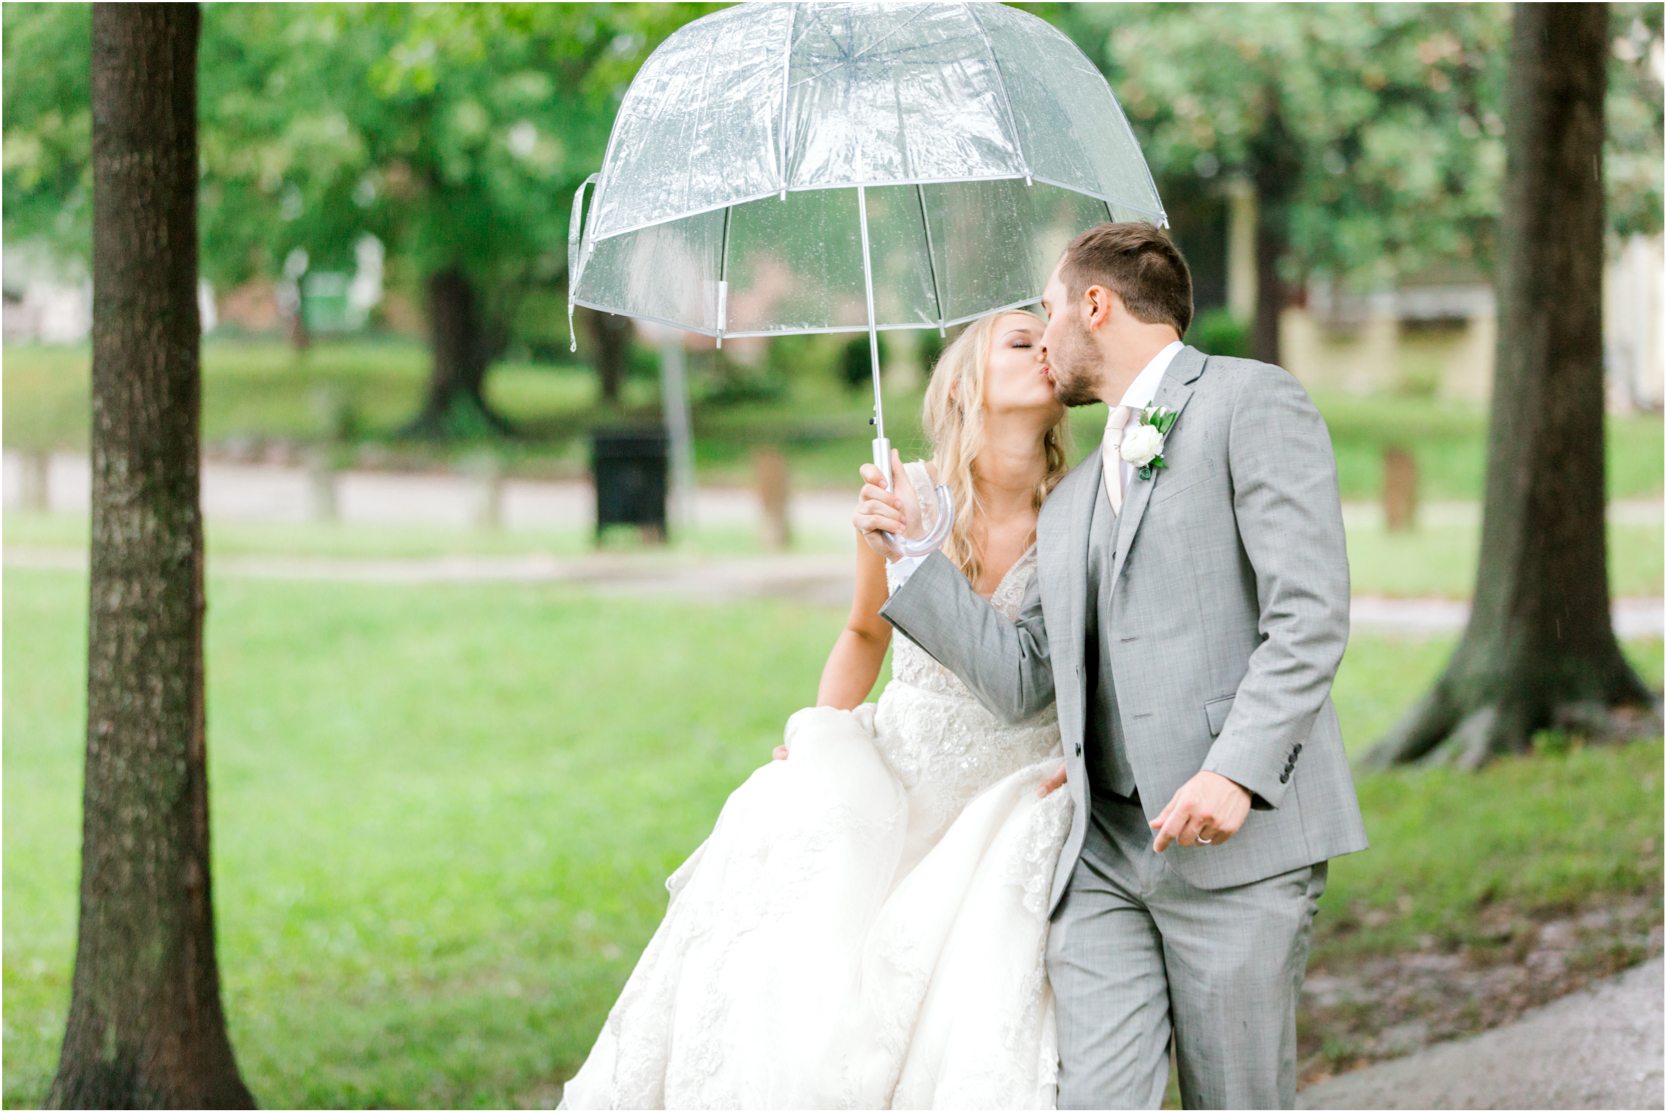 Rainy Umbrella Bride and Groom Portraits Tyler Park Louisville Kentucky Uniquely His Photography Wedding